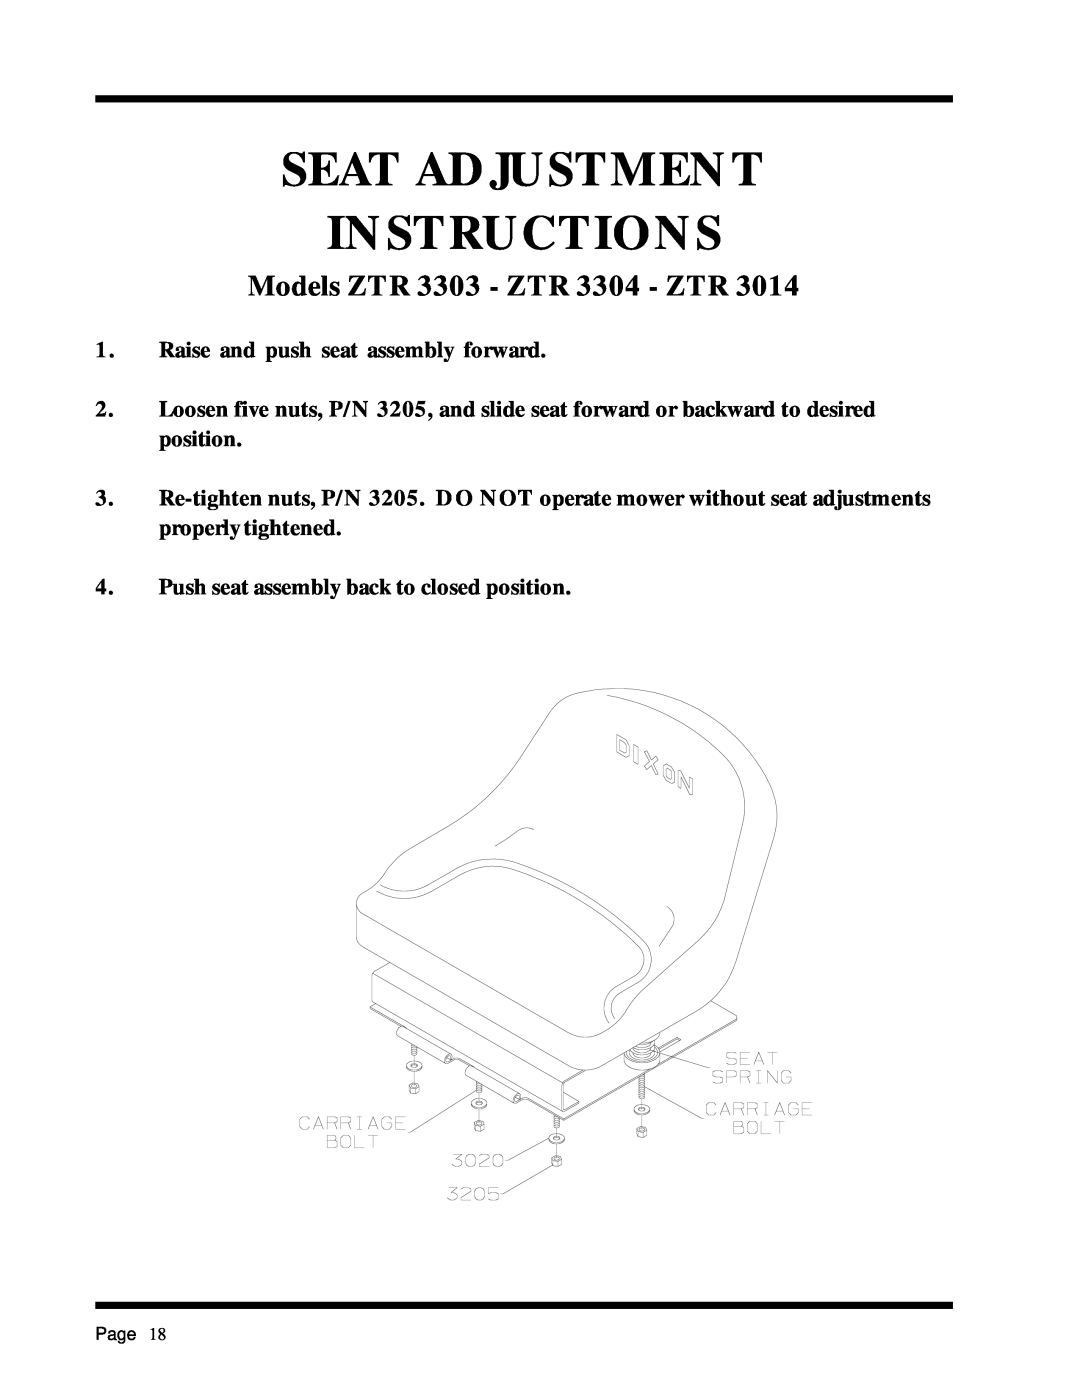 Dixon 1855-0599, 6520-1099 manual Seat Adjustment Instructions, Models ZTR 3303 - ZTR 3304 - ZTR, Page 